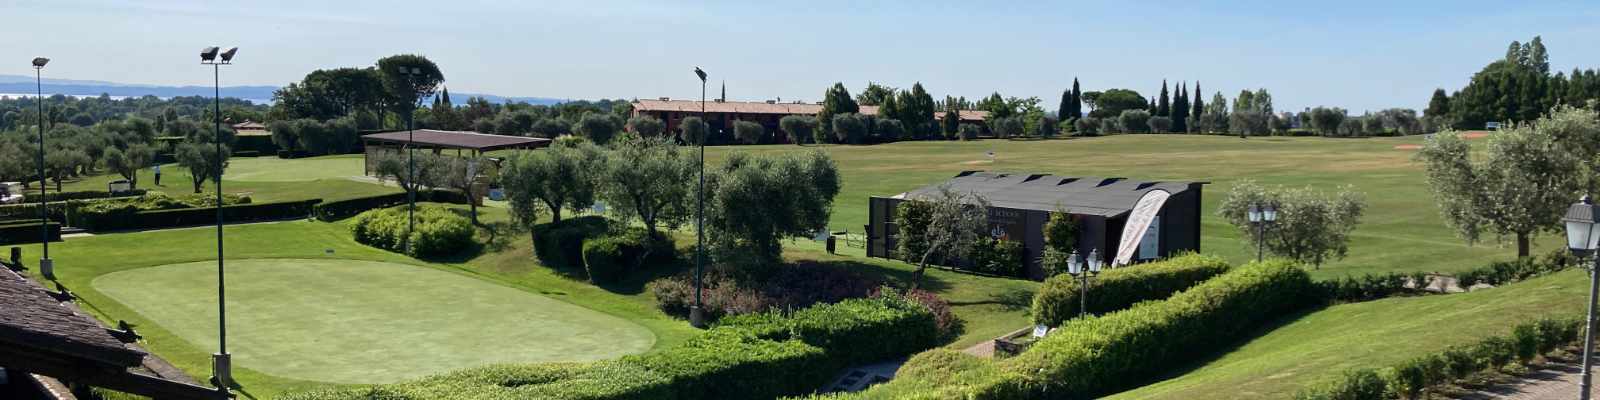 Golfplatz Garda Golf (photo by privat)